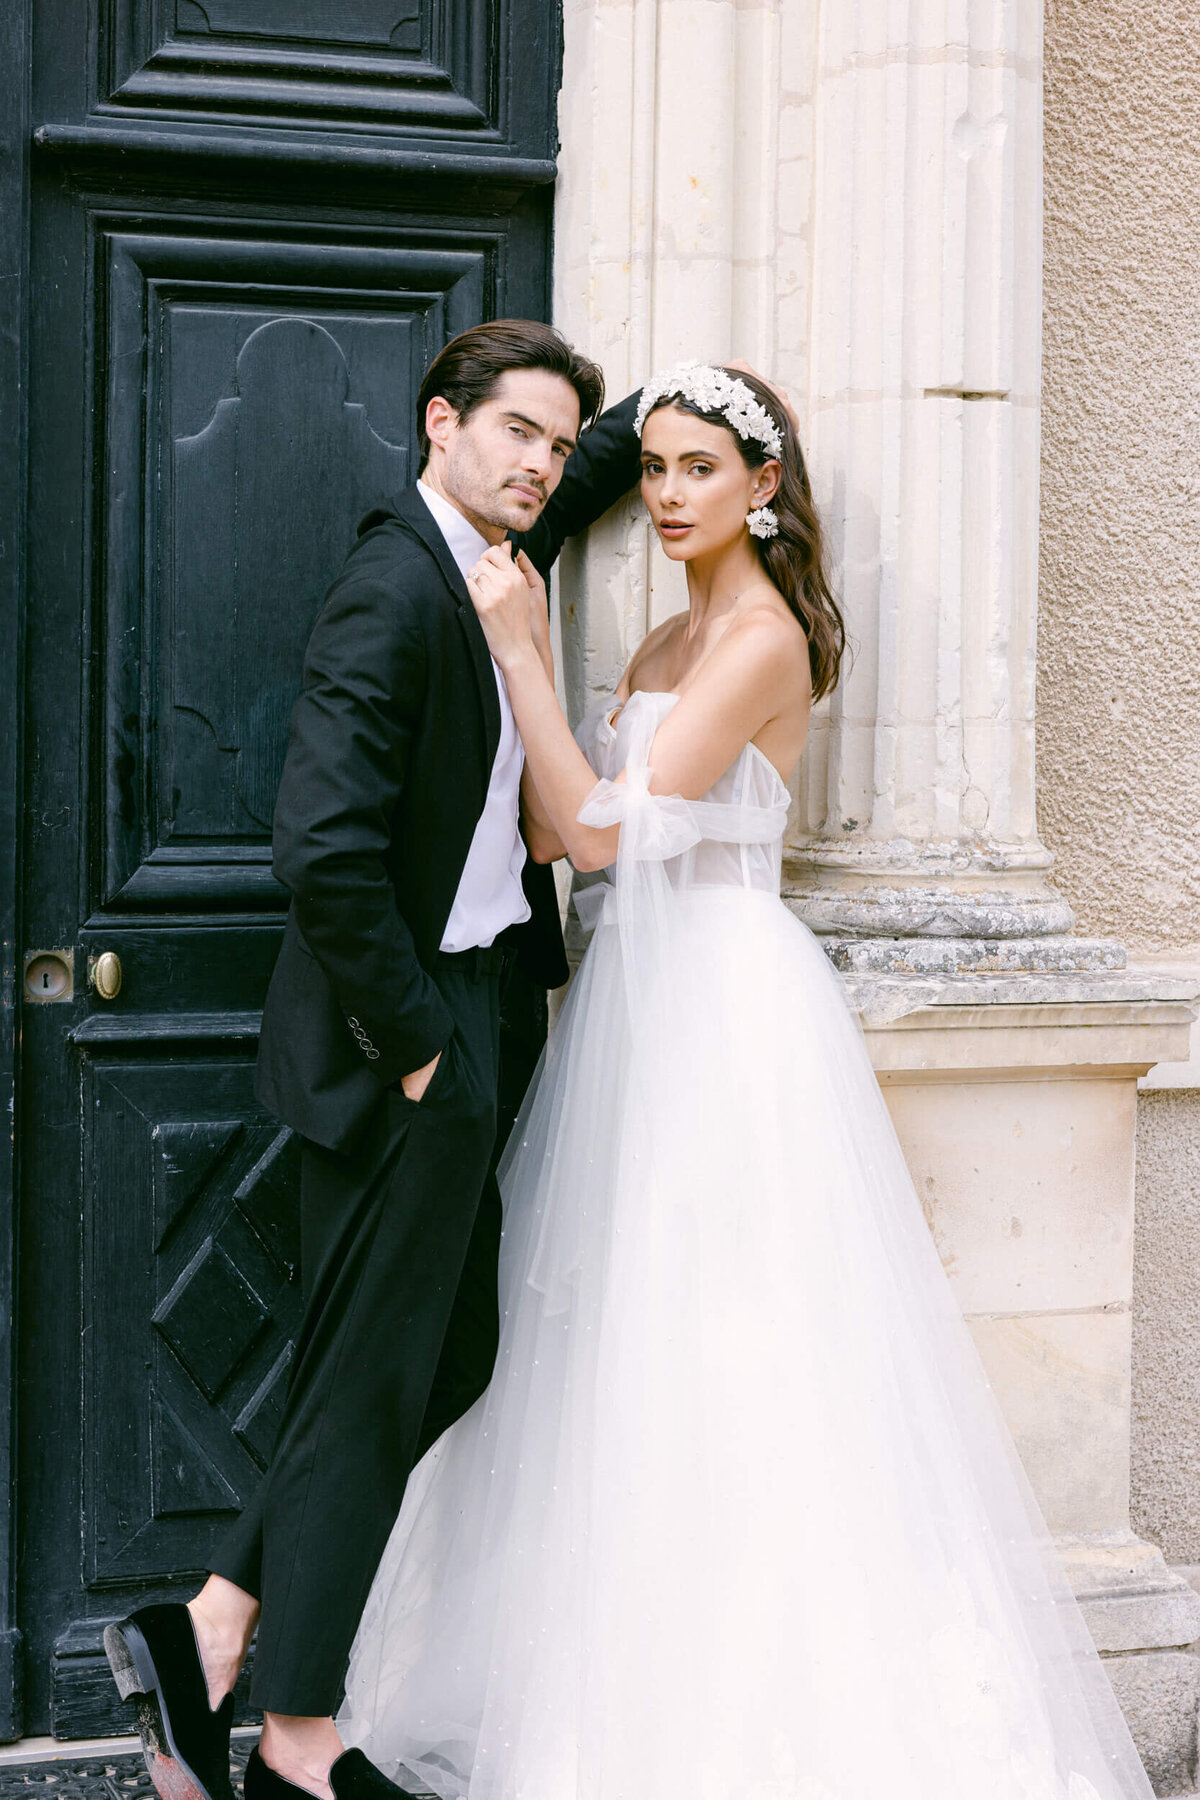 Jayce-Keil-Photo-Film-london-paris-ireland-wedding-photography-101